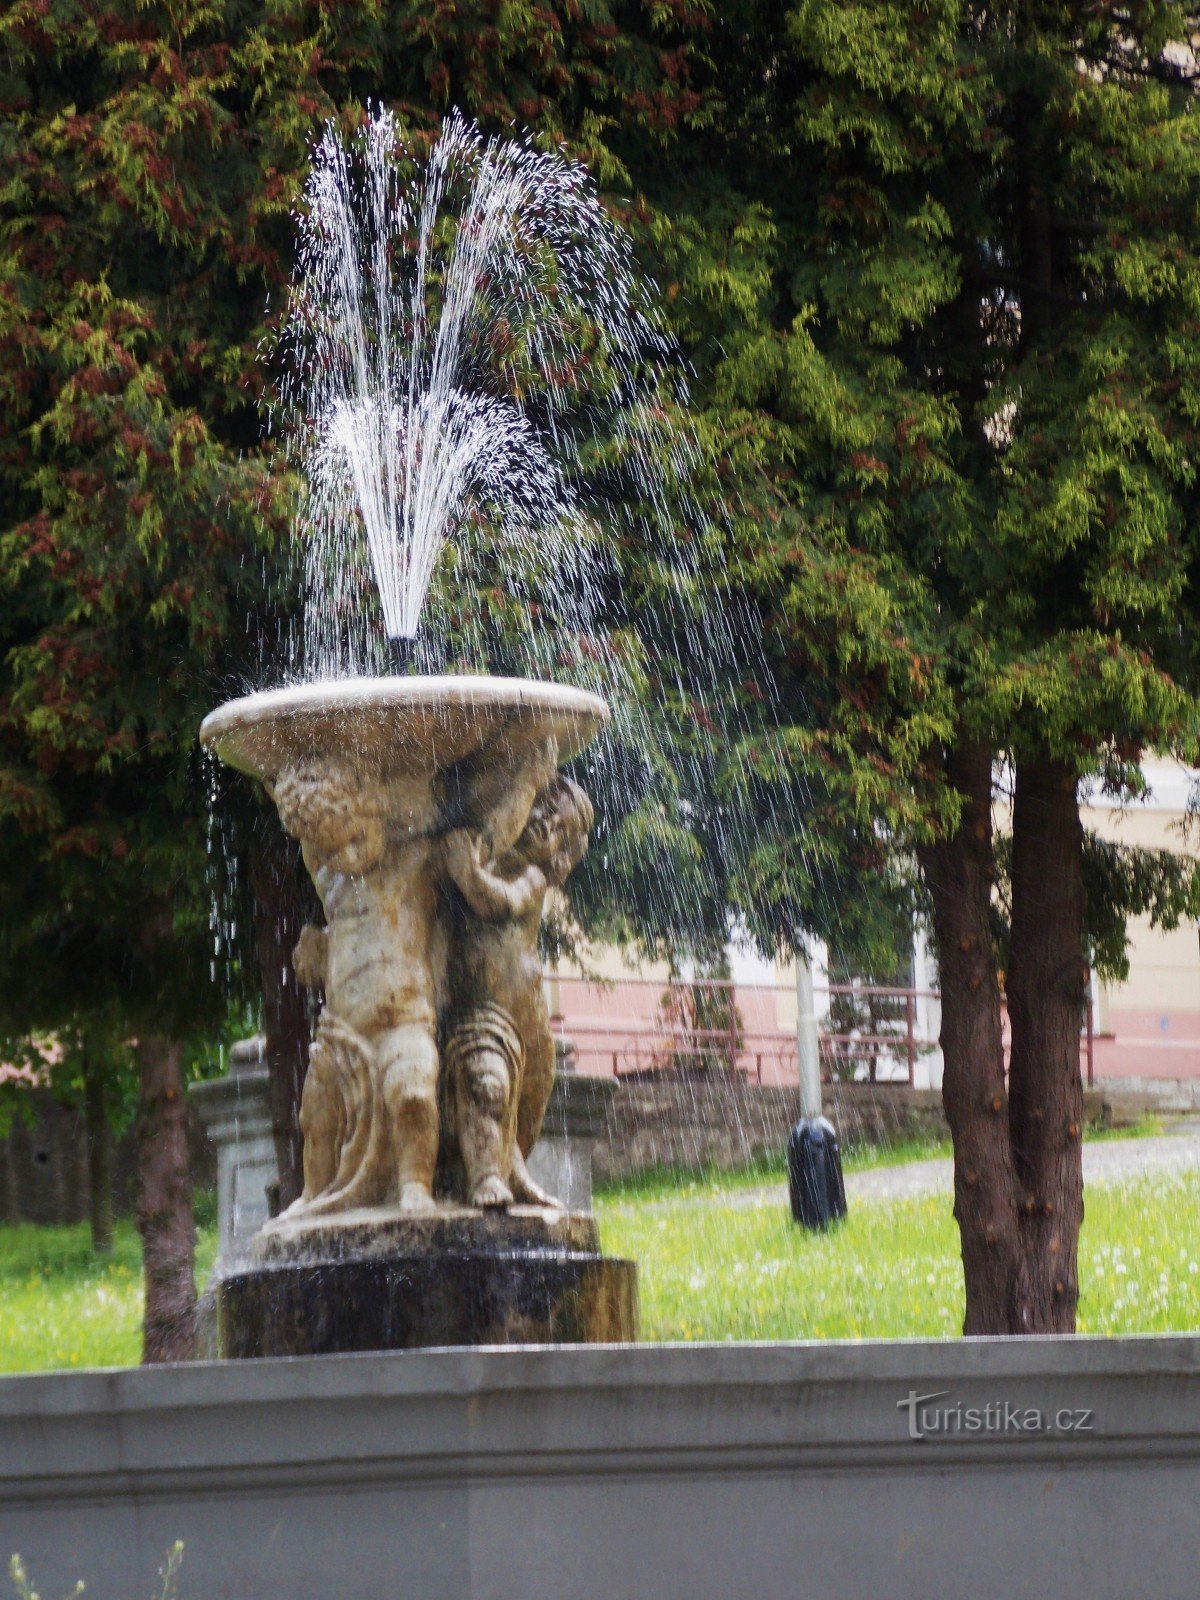 Empire fountain on the square in Vrbno pod Pradědem